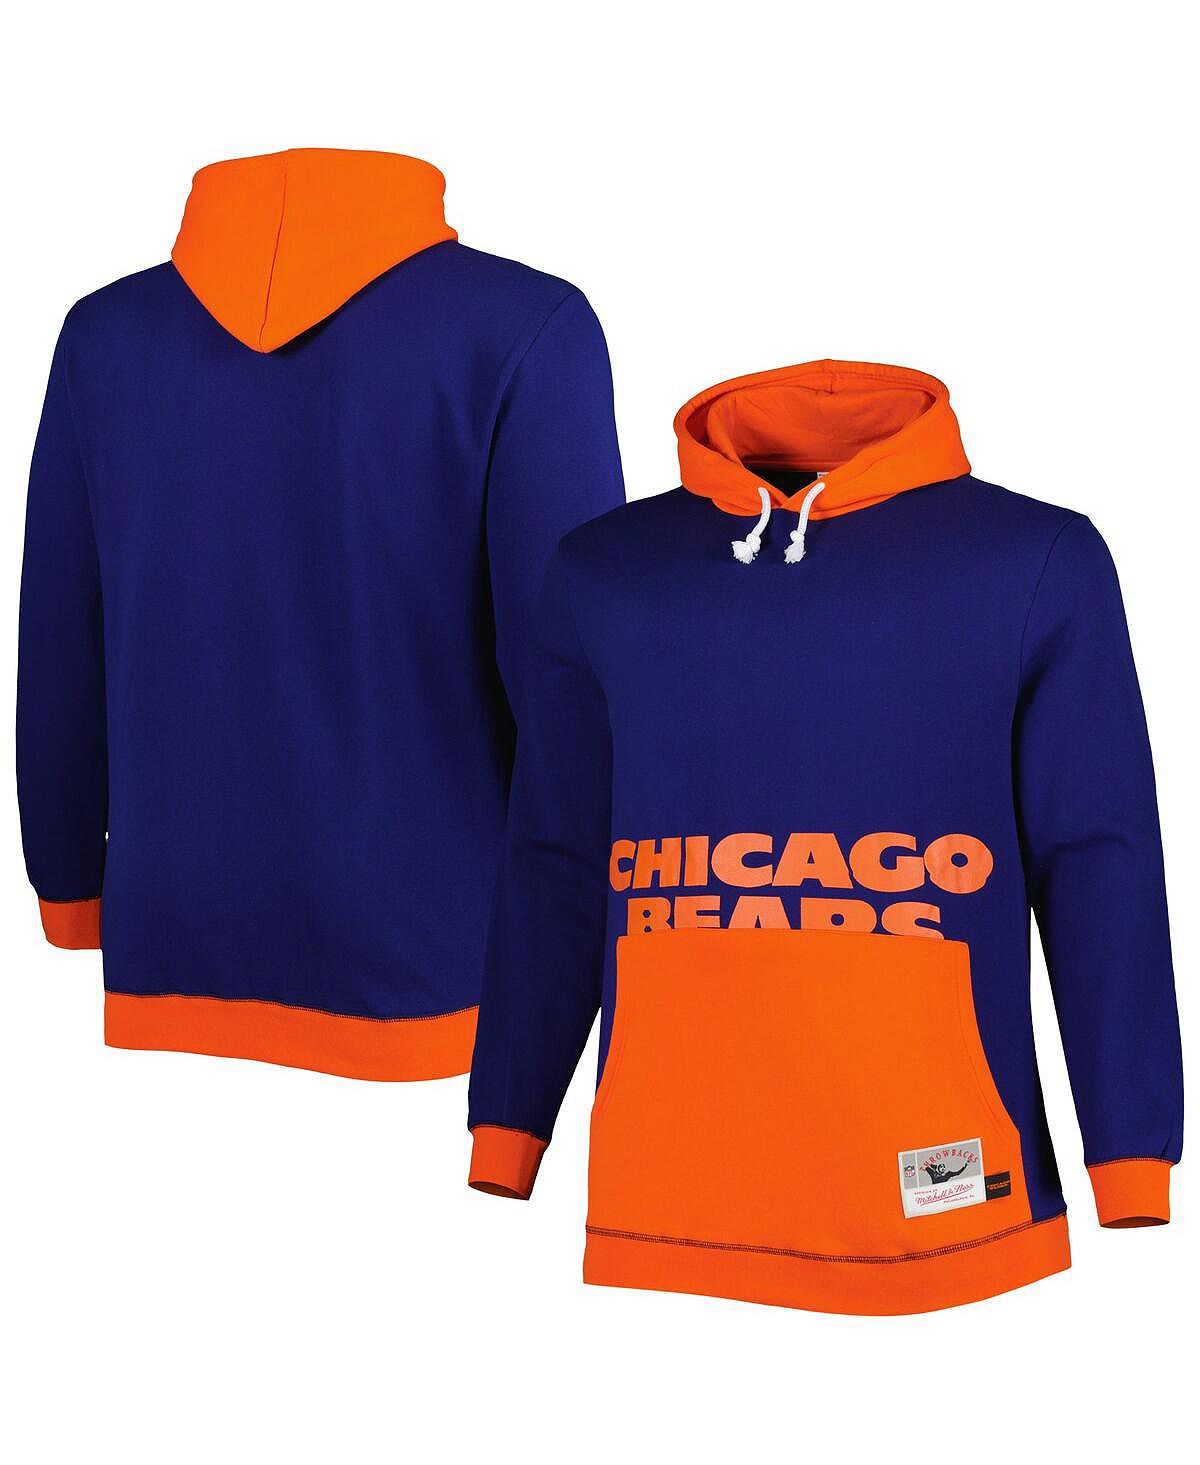 Мужская темно-синяя и оранжевая толстовка с капюшоном chicago bears big and tall big face Mitchell & Ness, мульти цена и фото